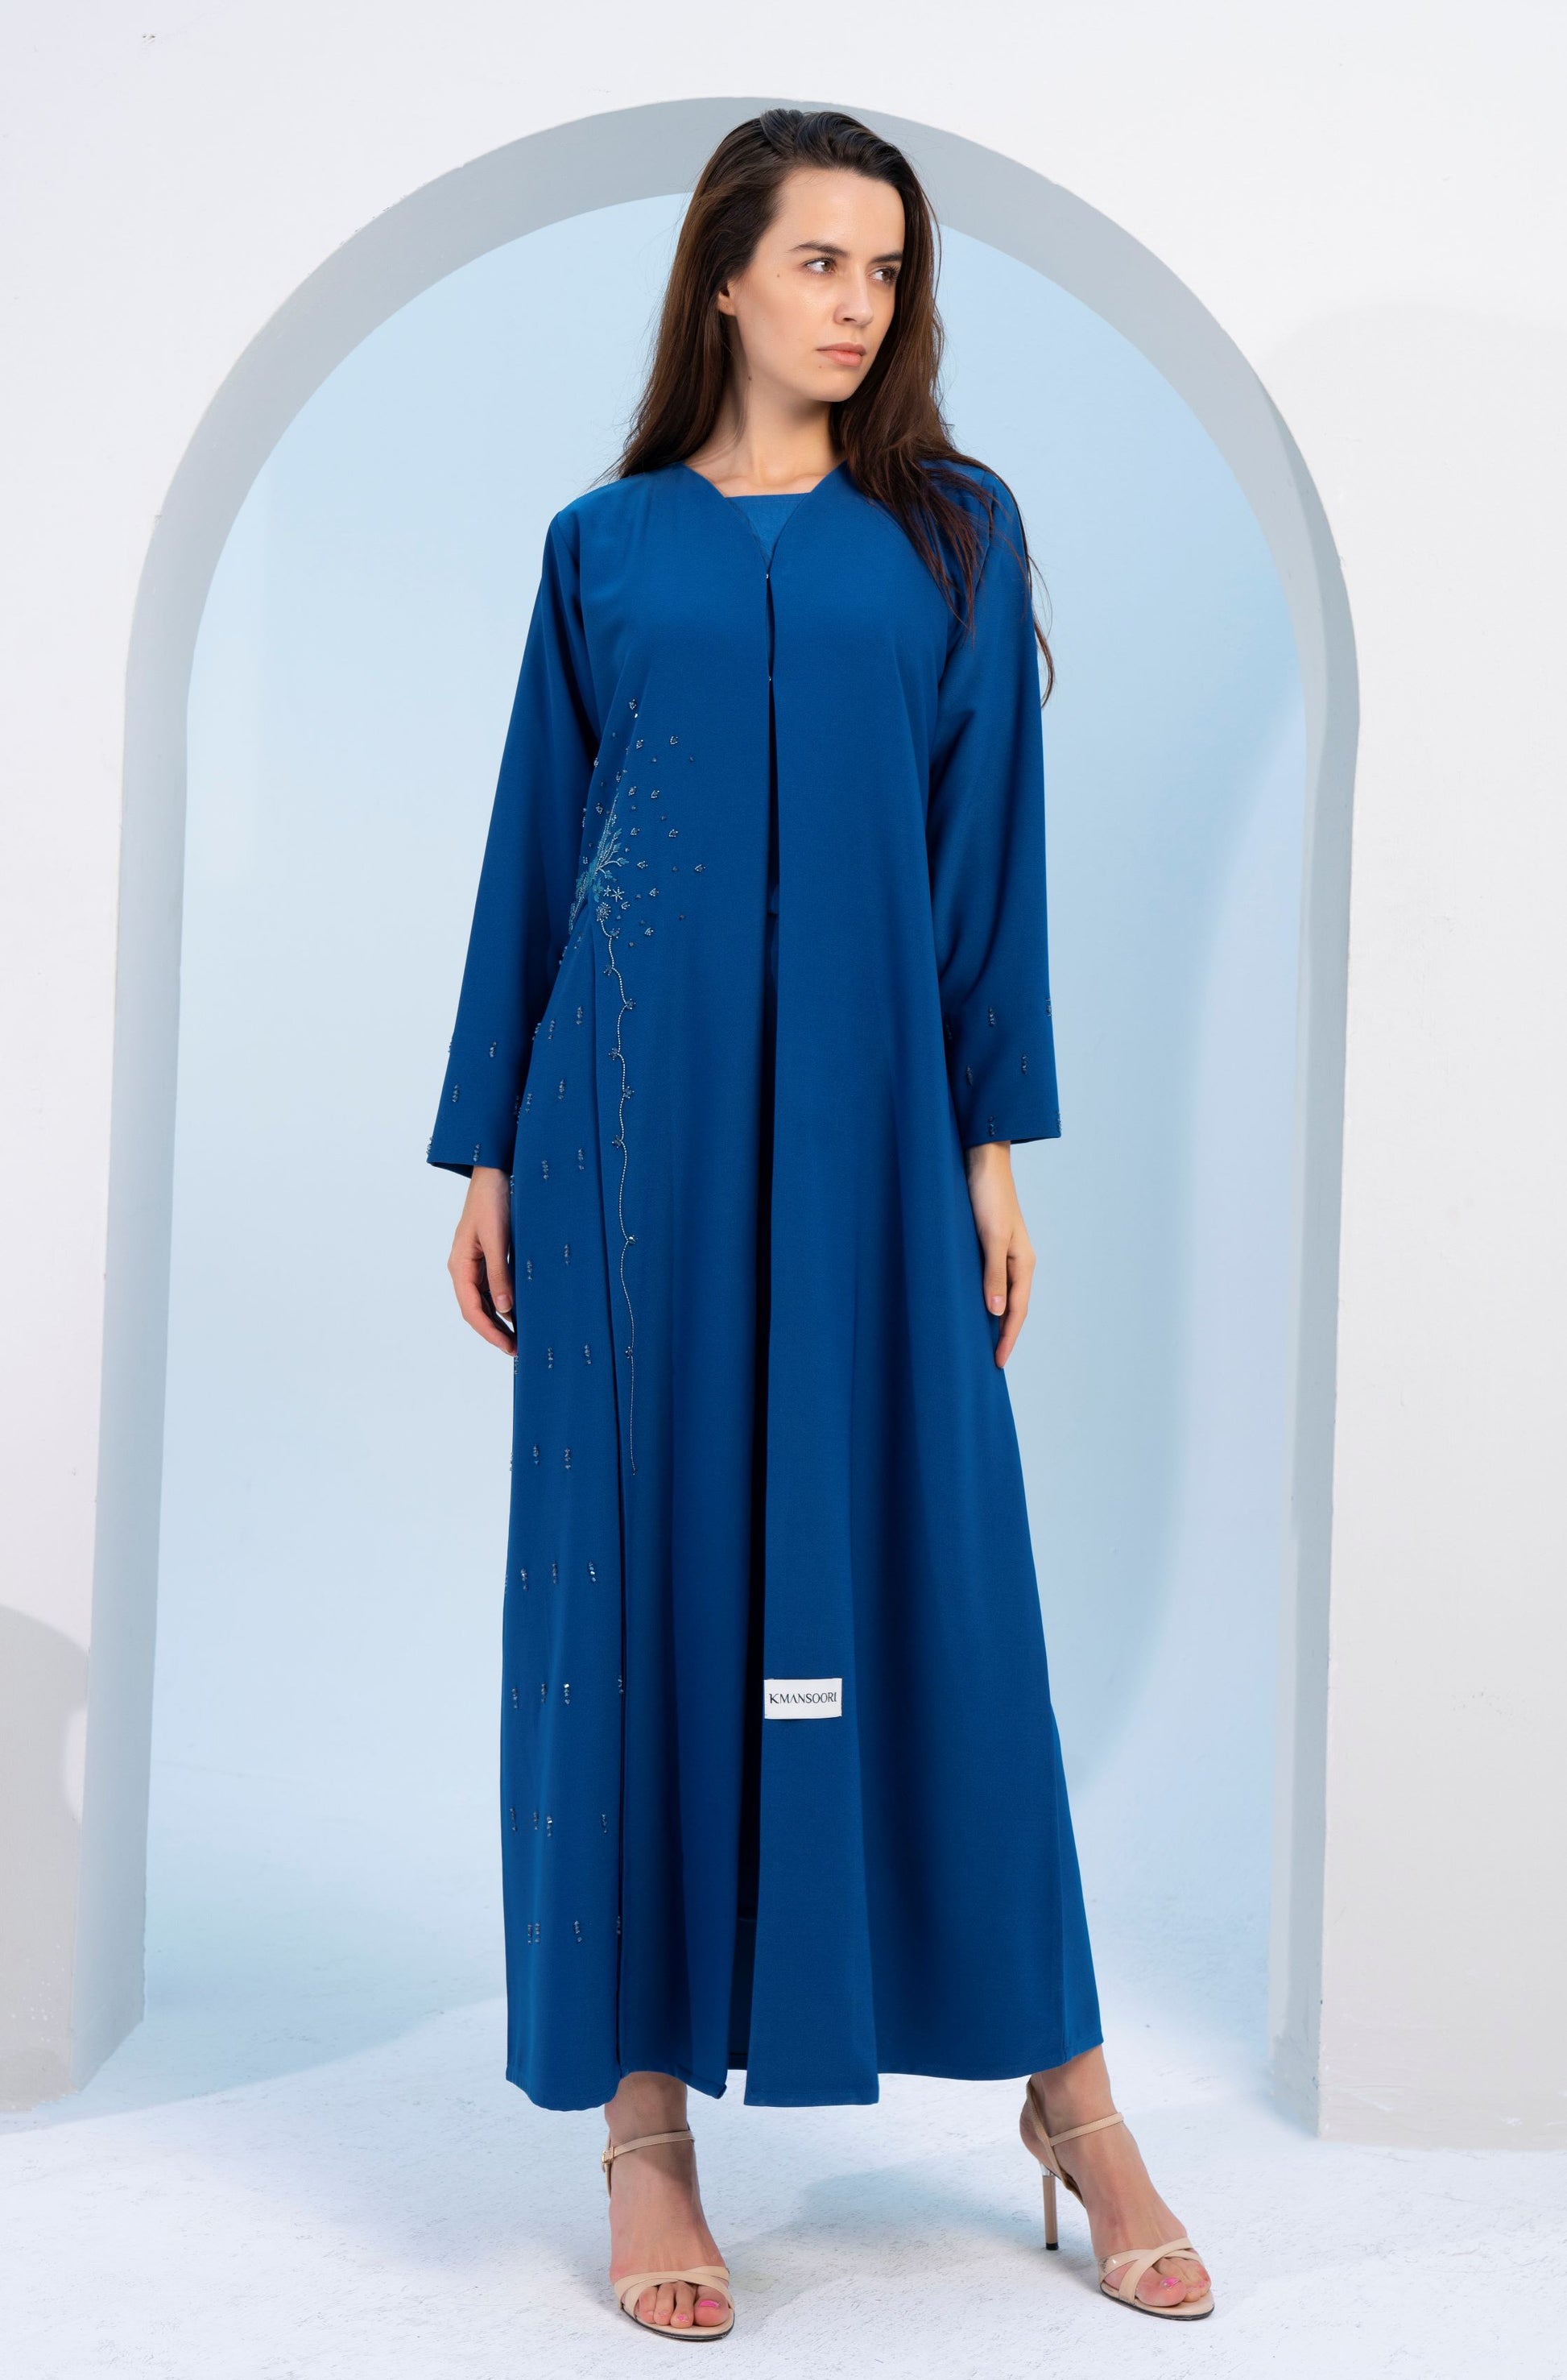 Girl wearing sky blue abaya for women.